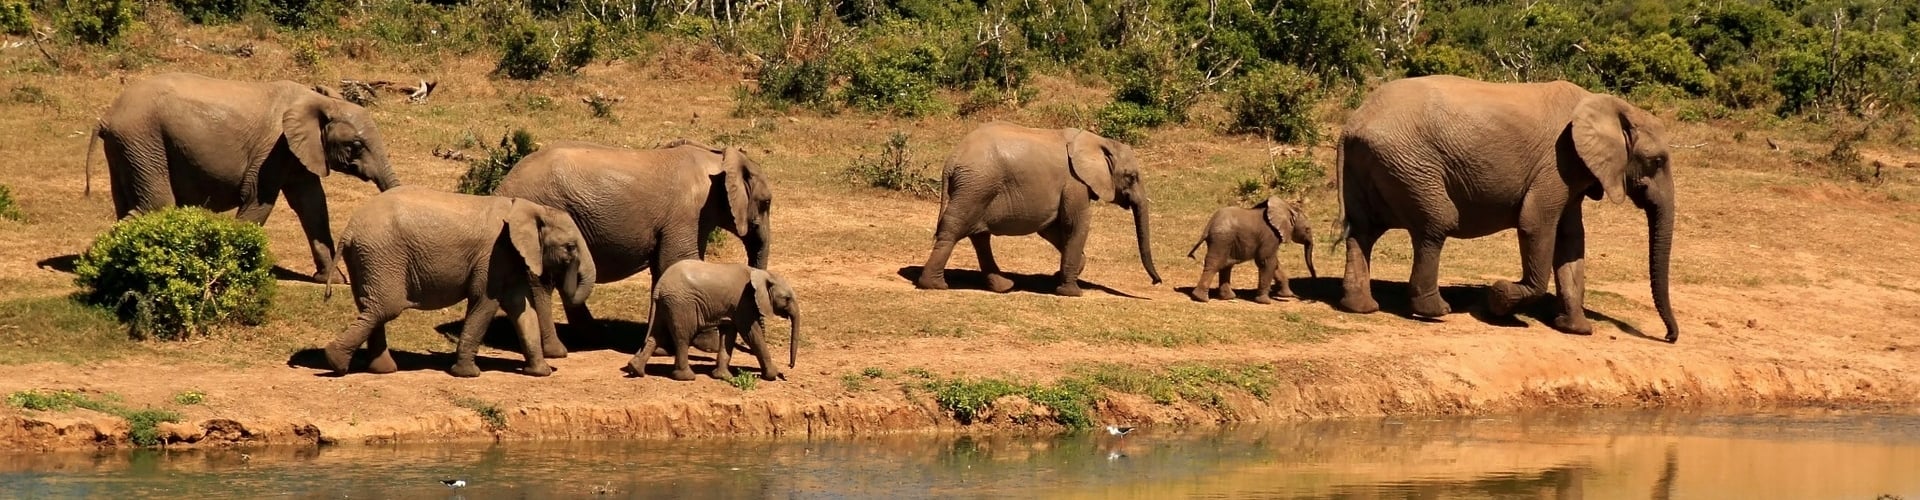 olifanten-zuid-afrika